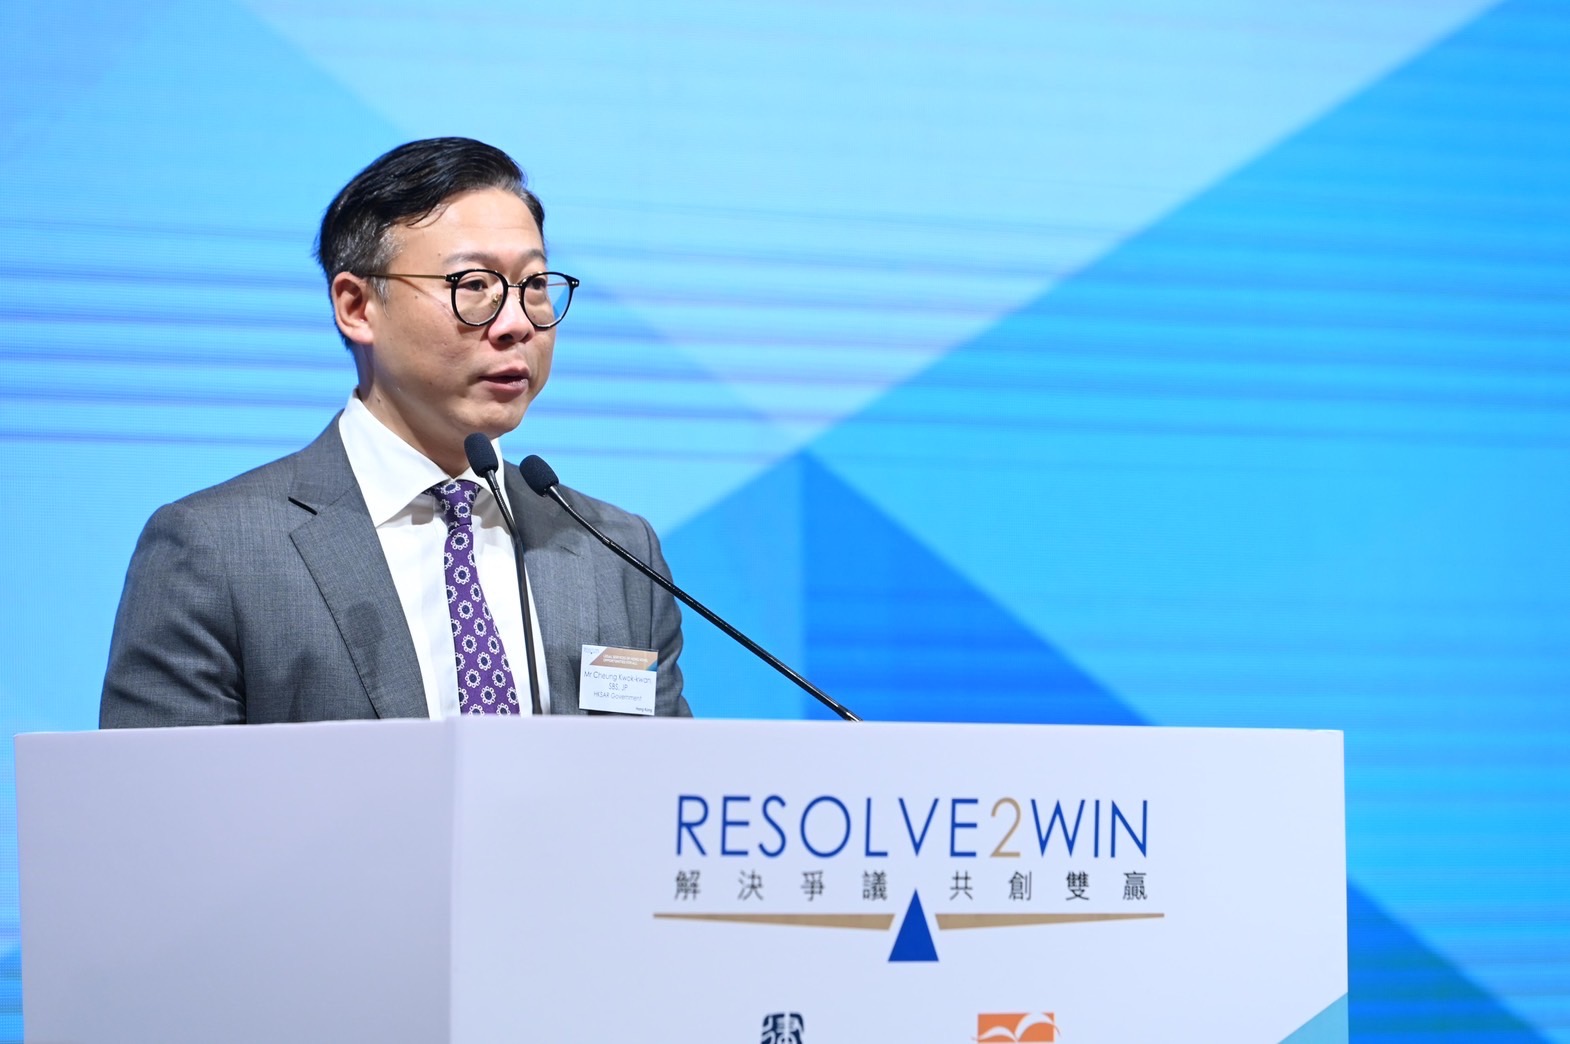 Resolve2Win Promotes Hong Kong Legal Services in Bangkok